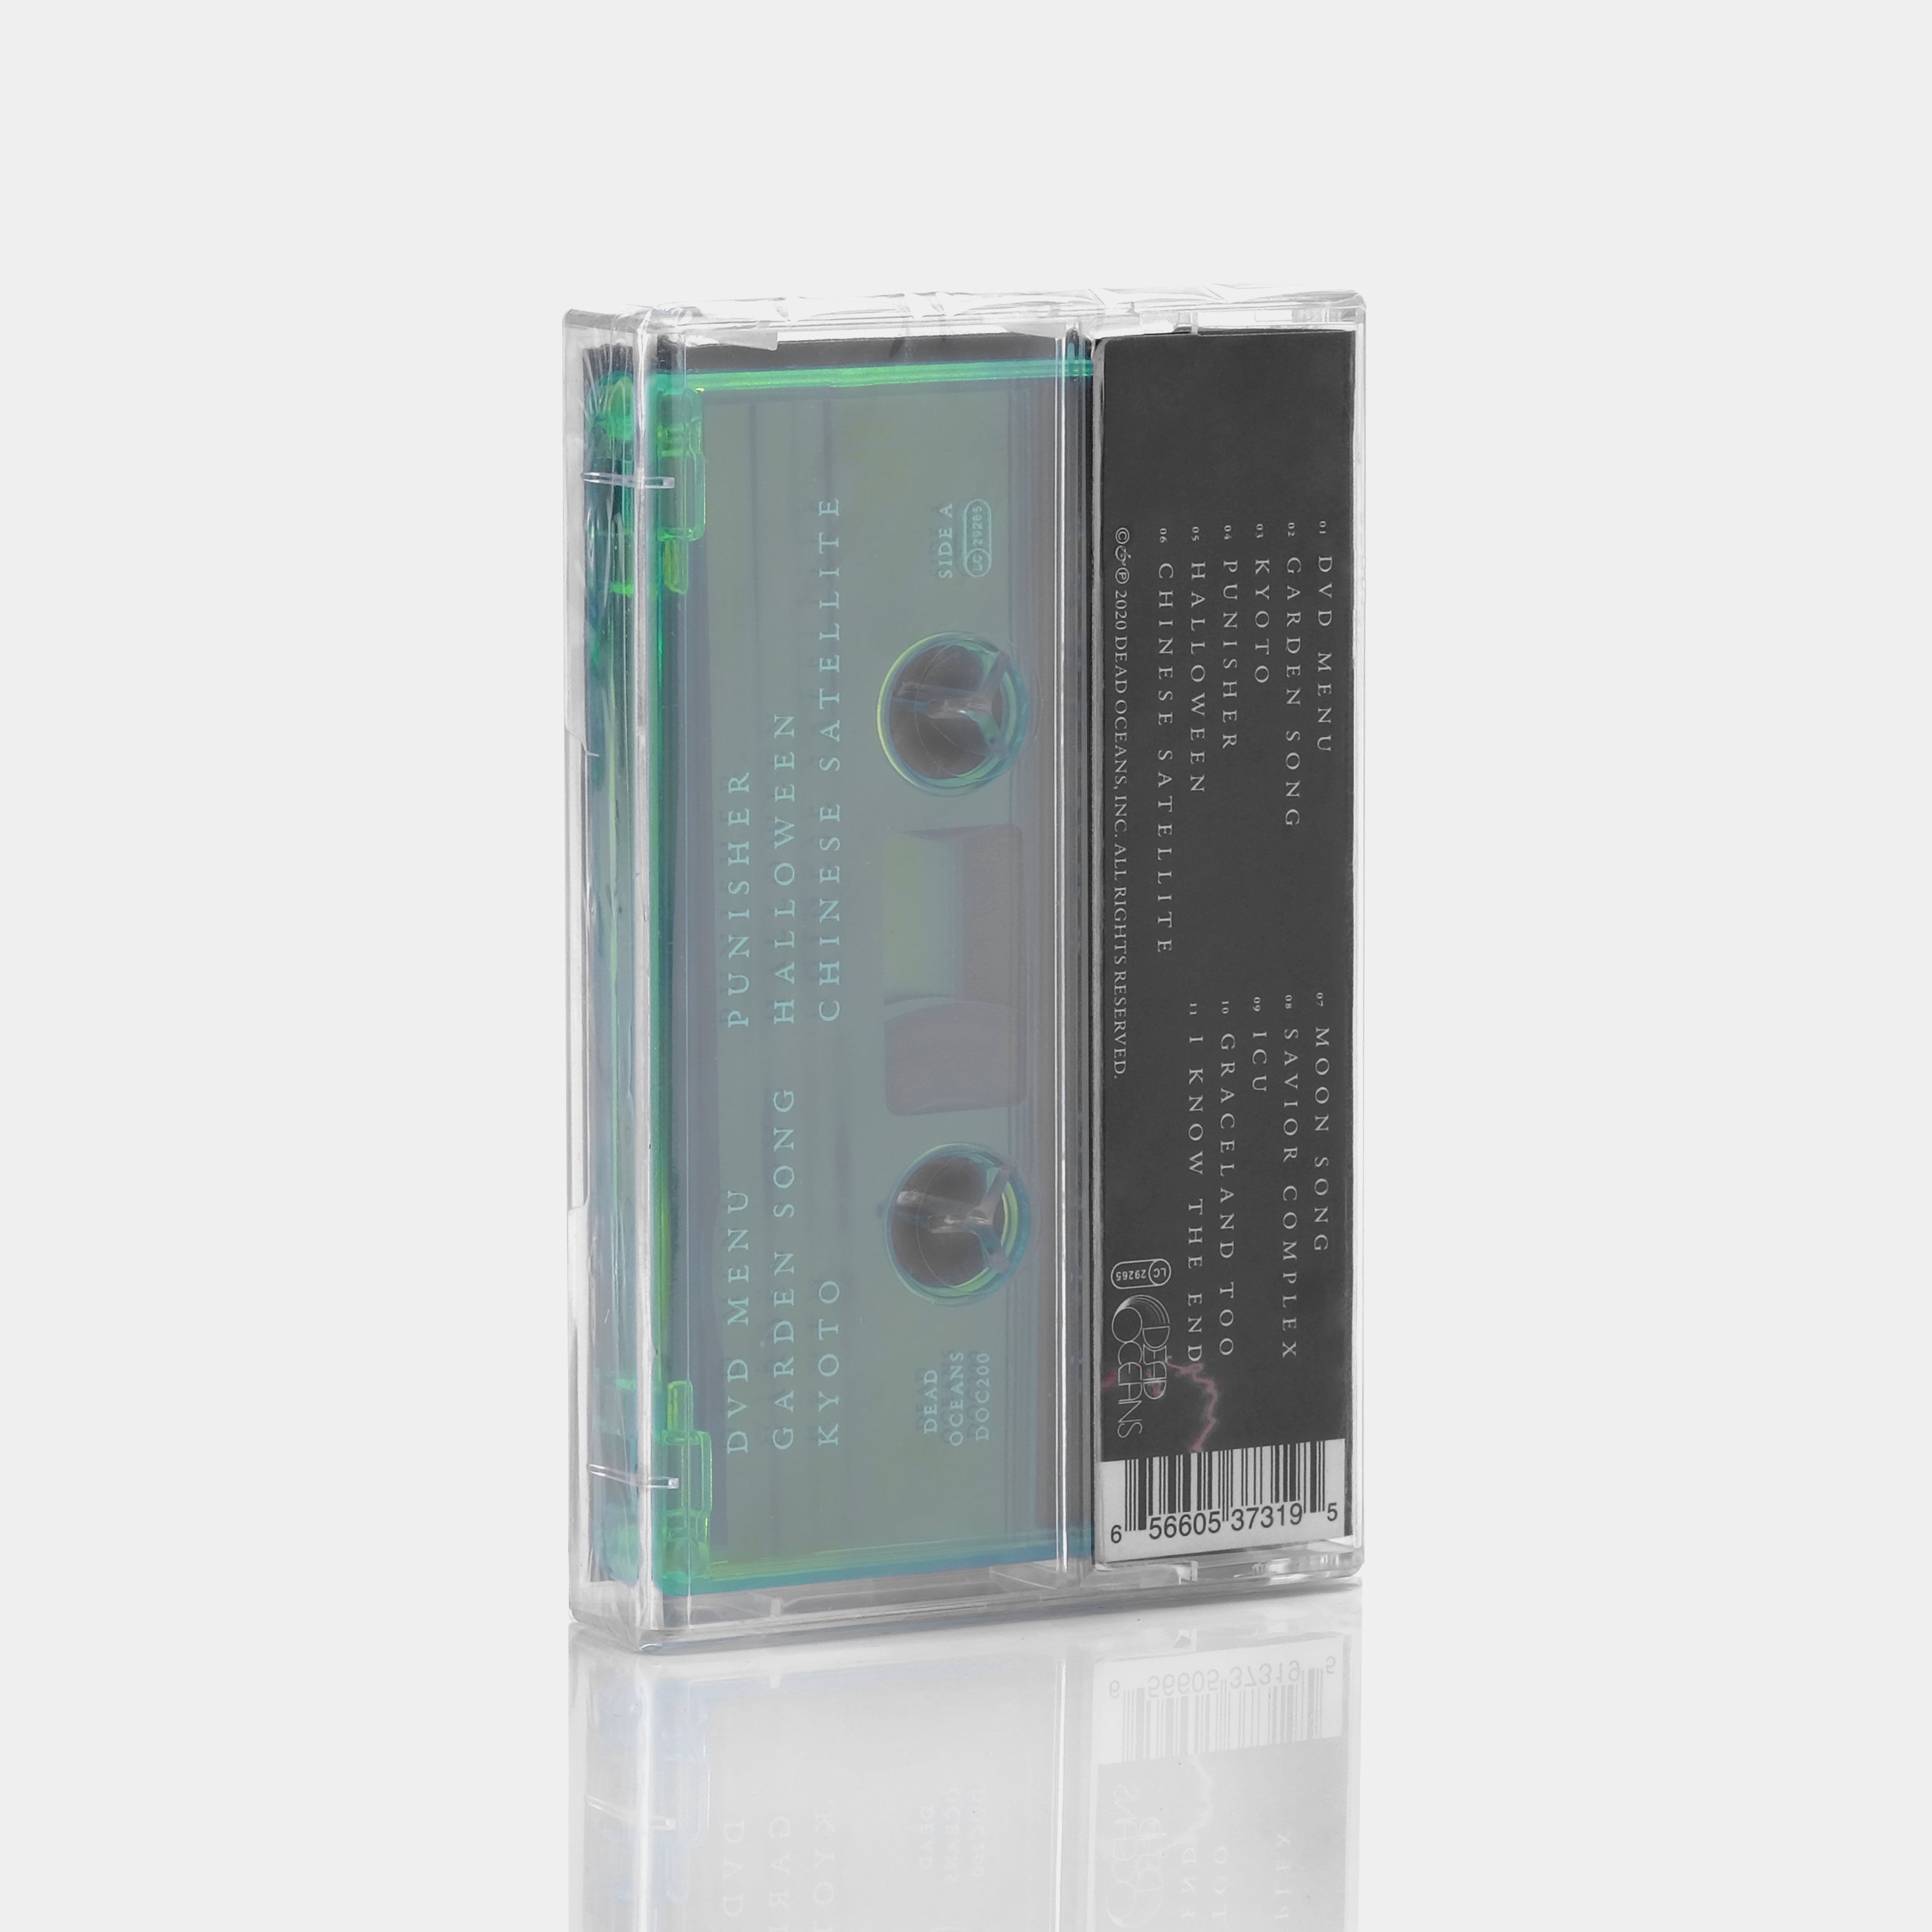 Phoebe Bridgers Punisher cassette tape back with fluorescent green cassette